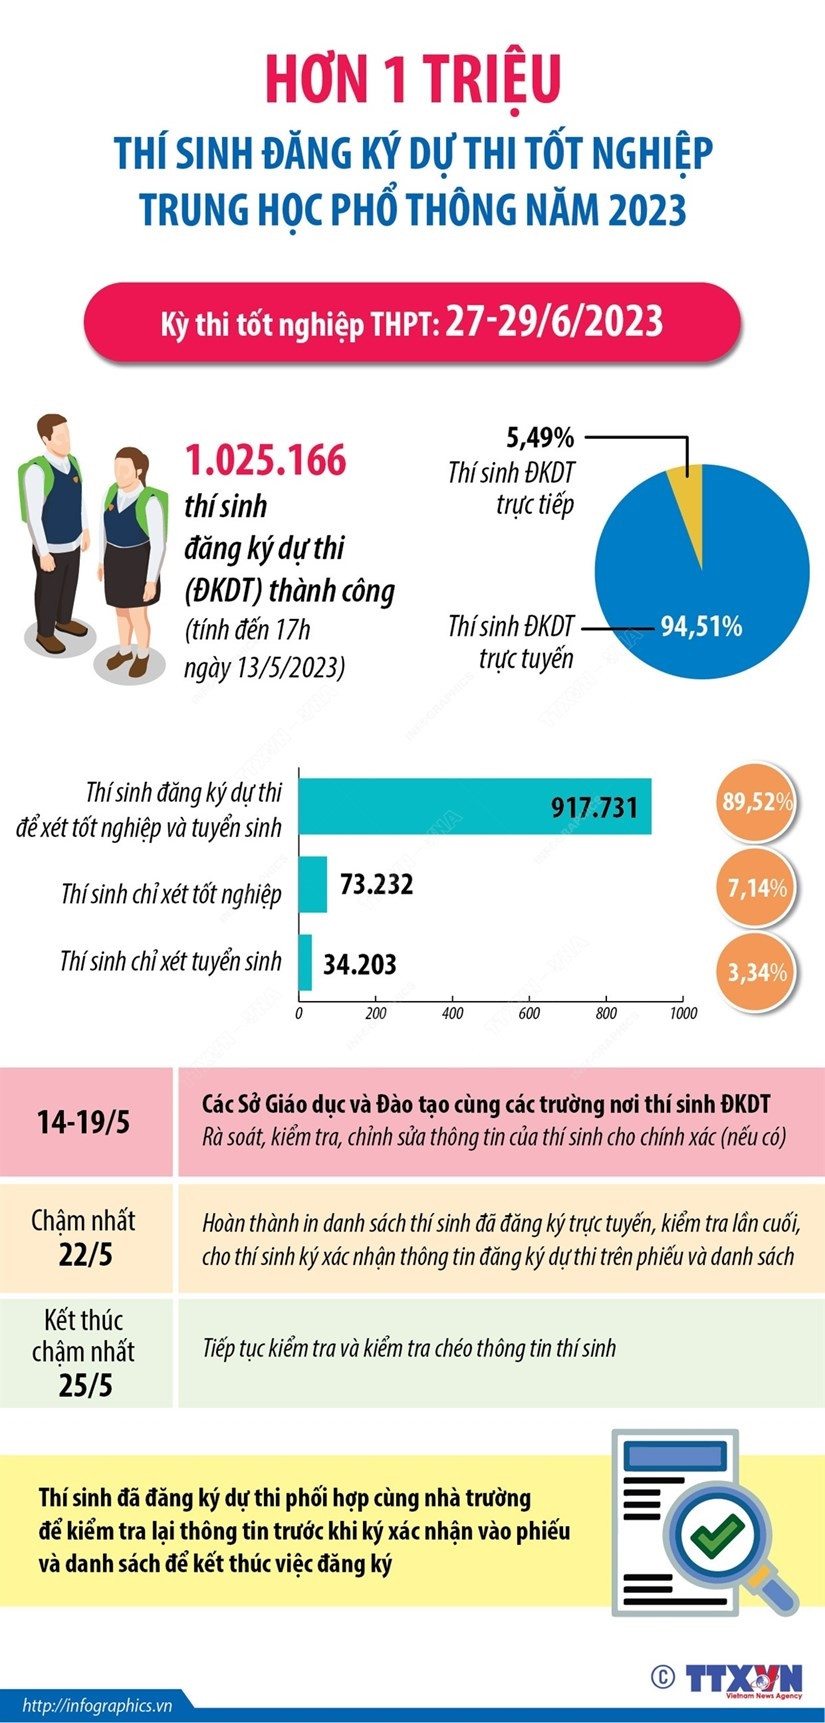 [Infographics] Hon 1 trieu thi sinh dang ky thi tot nghiep THPT 2023 hinh anh 1